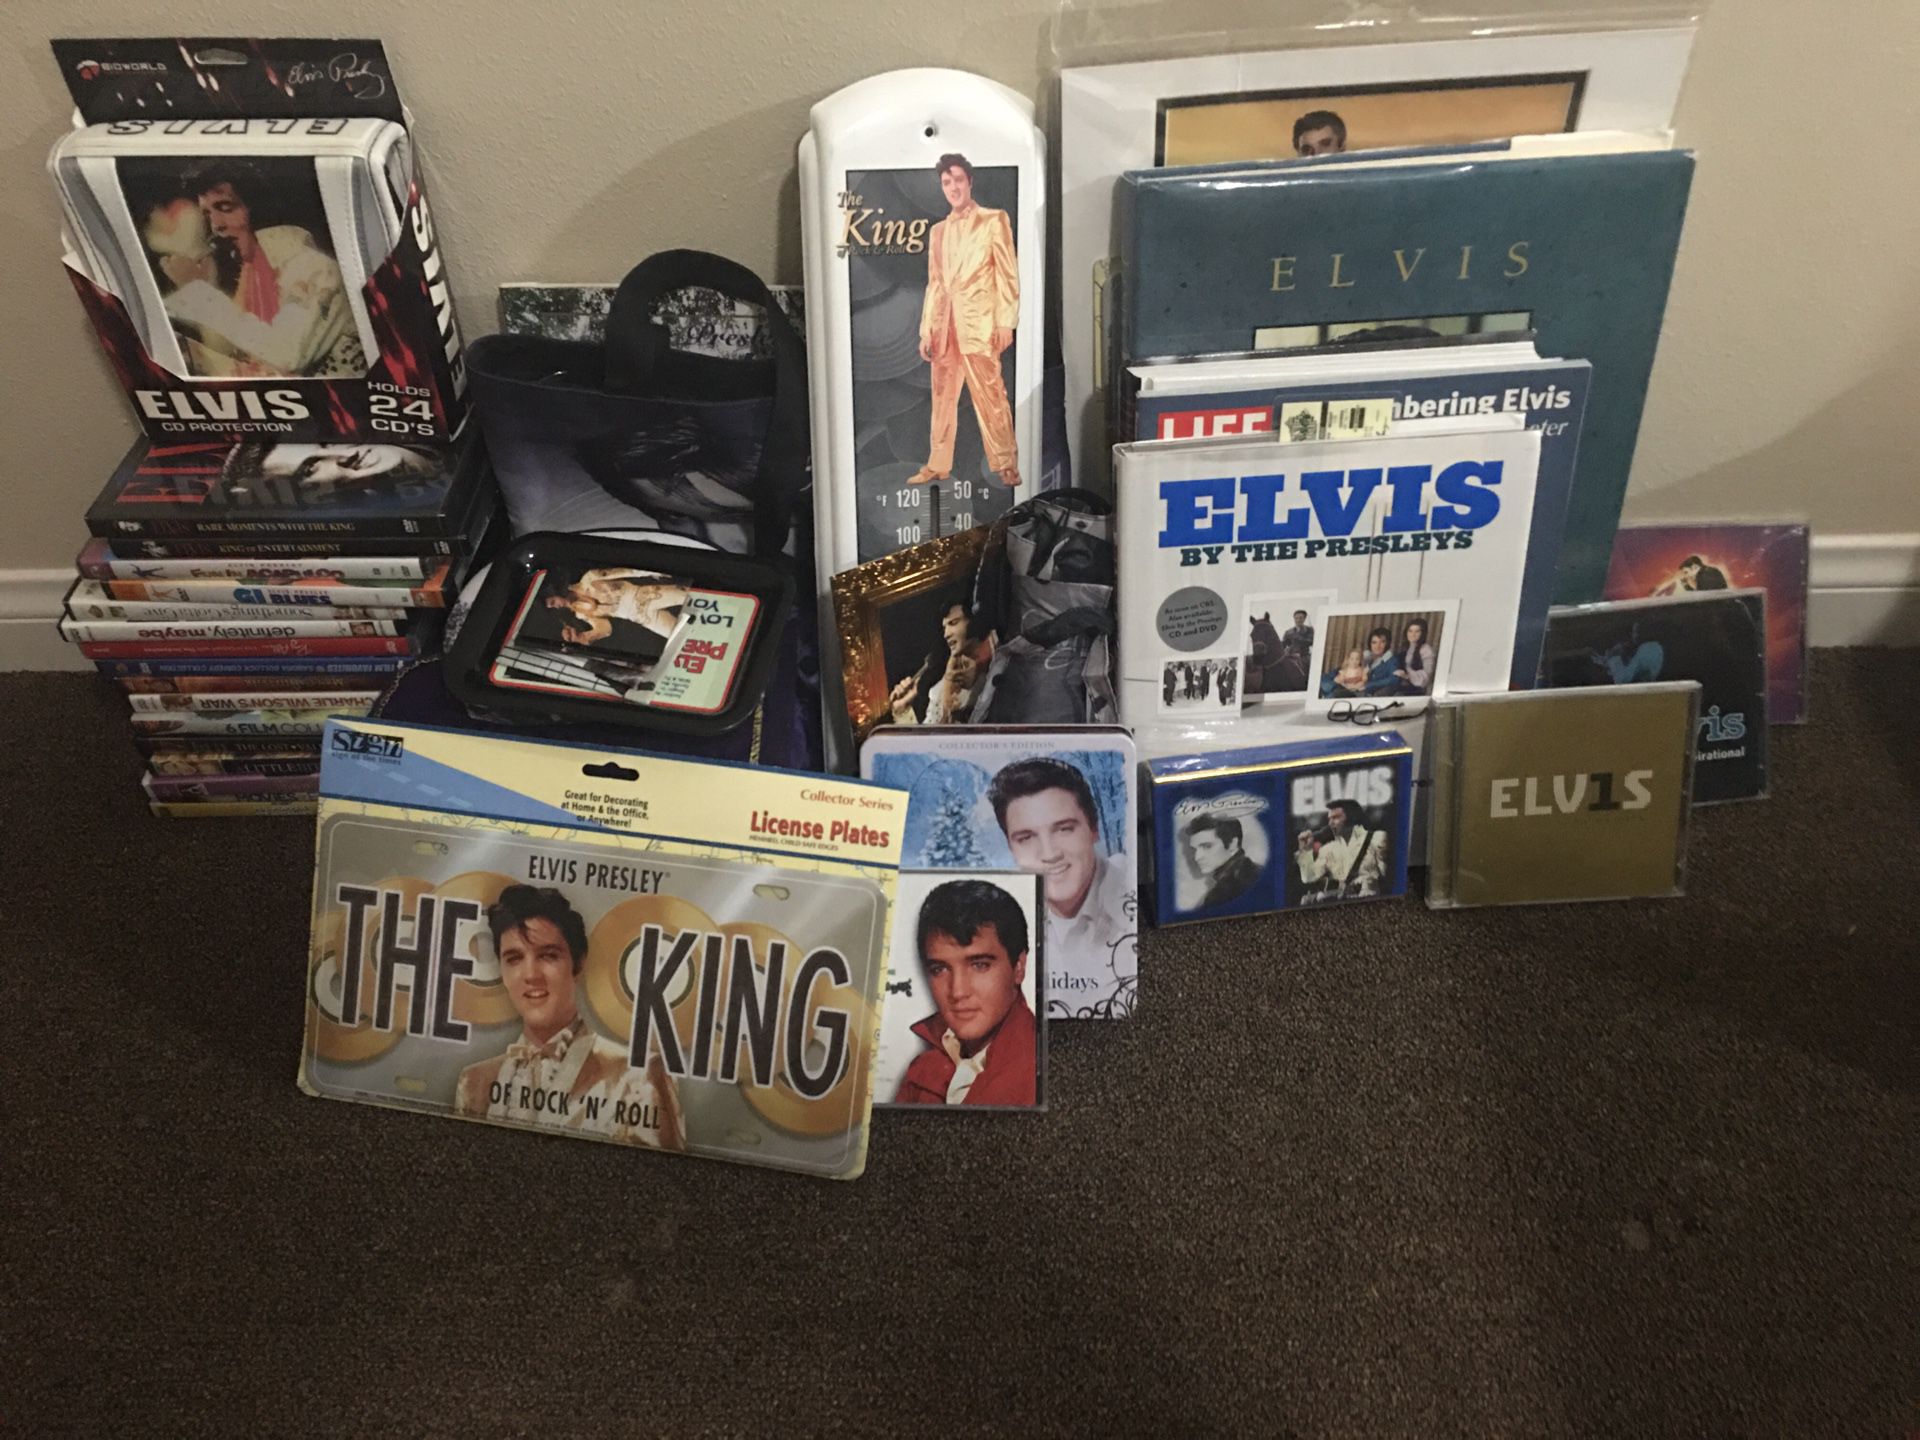 Elvis Collection